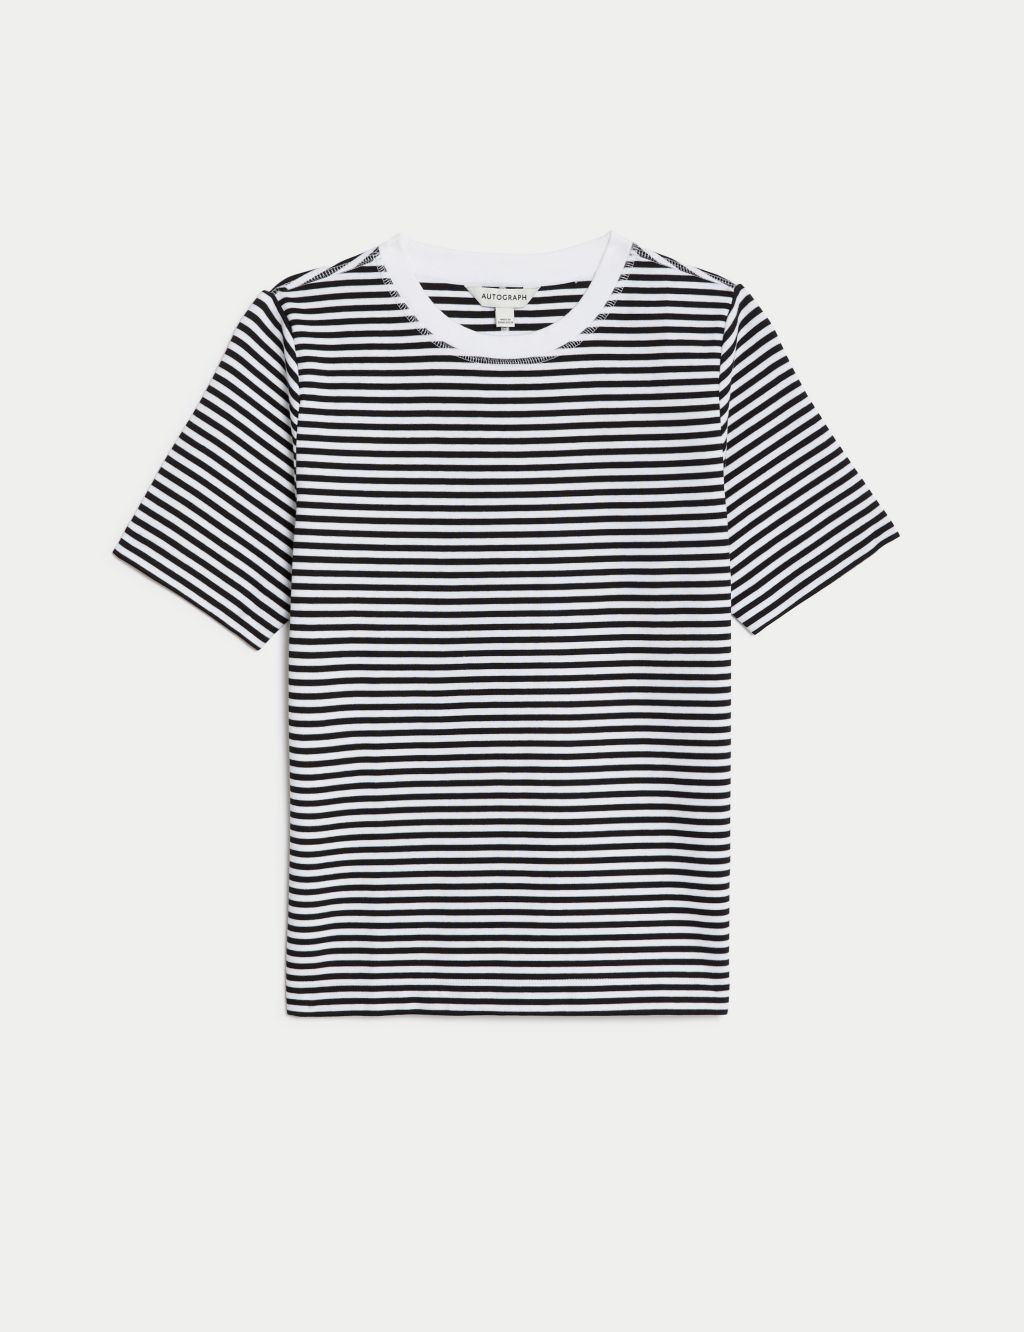 Cotton Rich Striped T-Shirt image 2